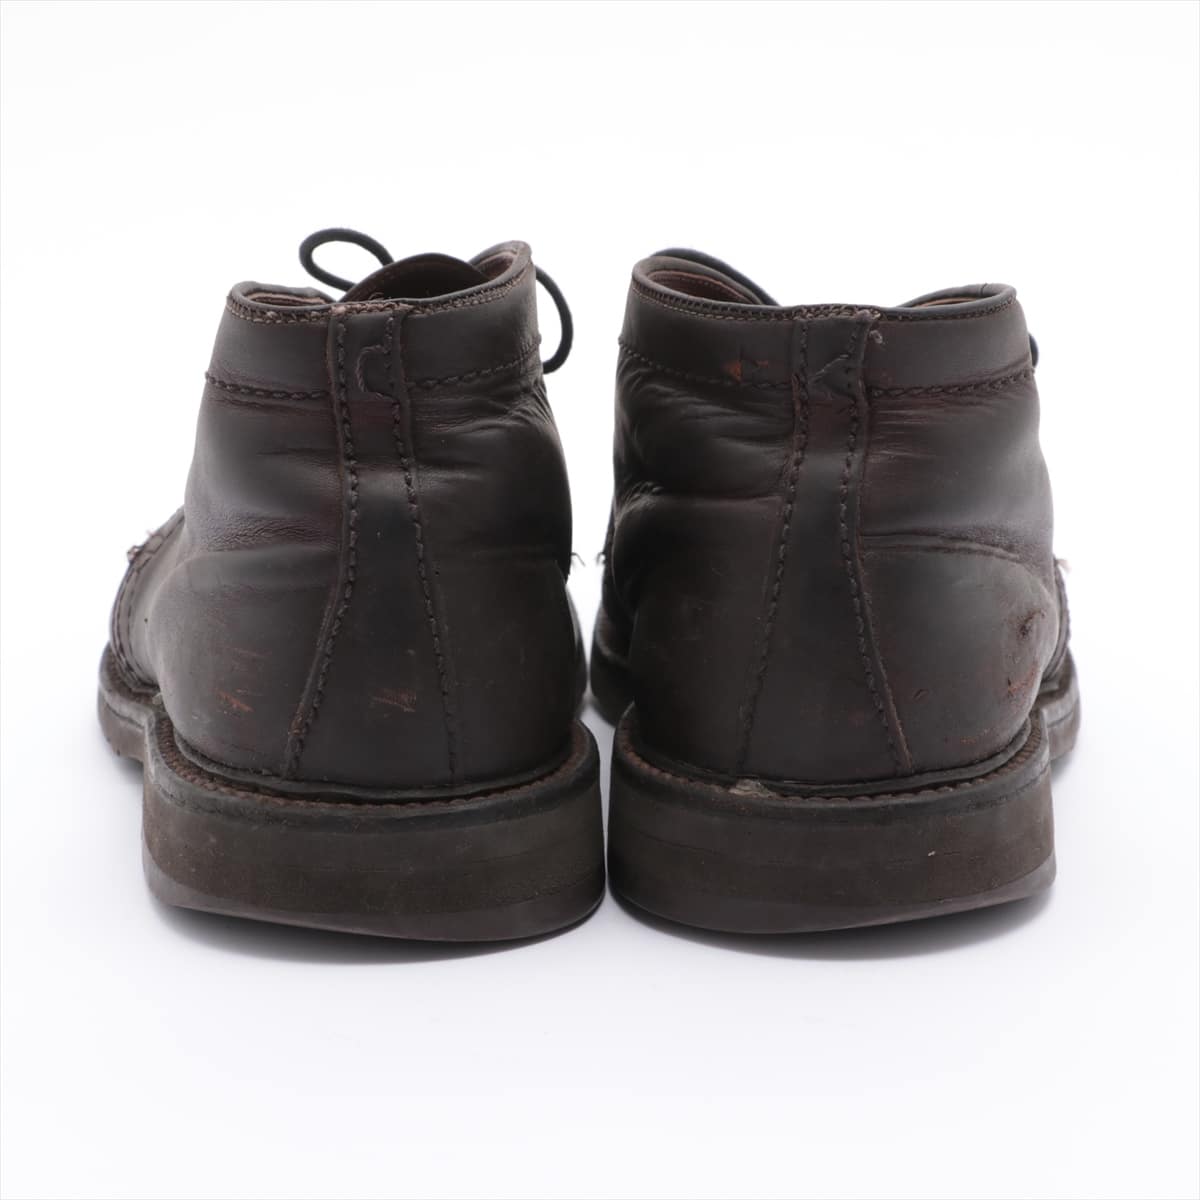 Alden Leather Chukka Boots 7 Men's Brown 12728 Oiled Chukka Boots